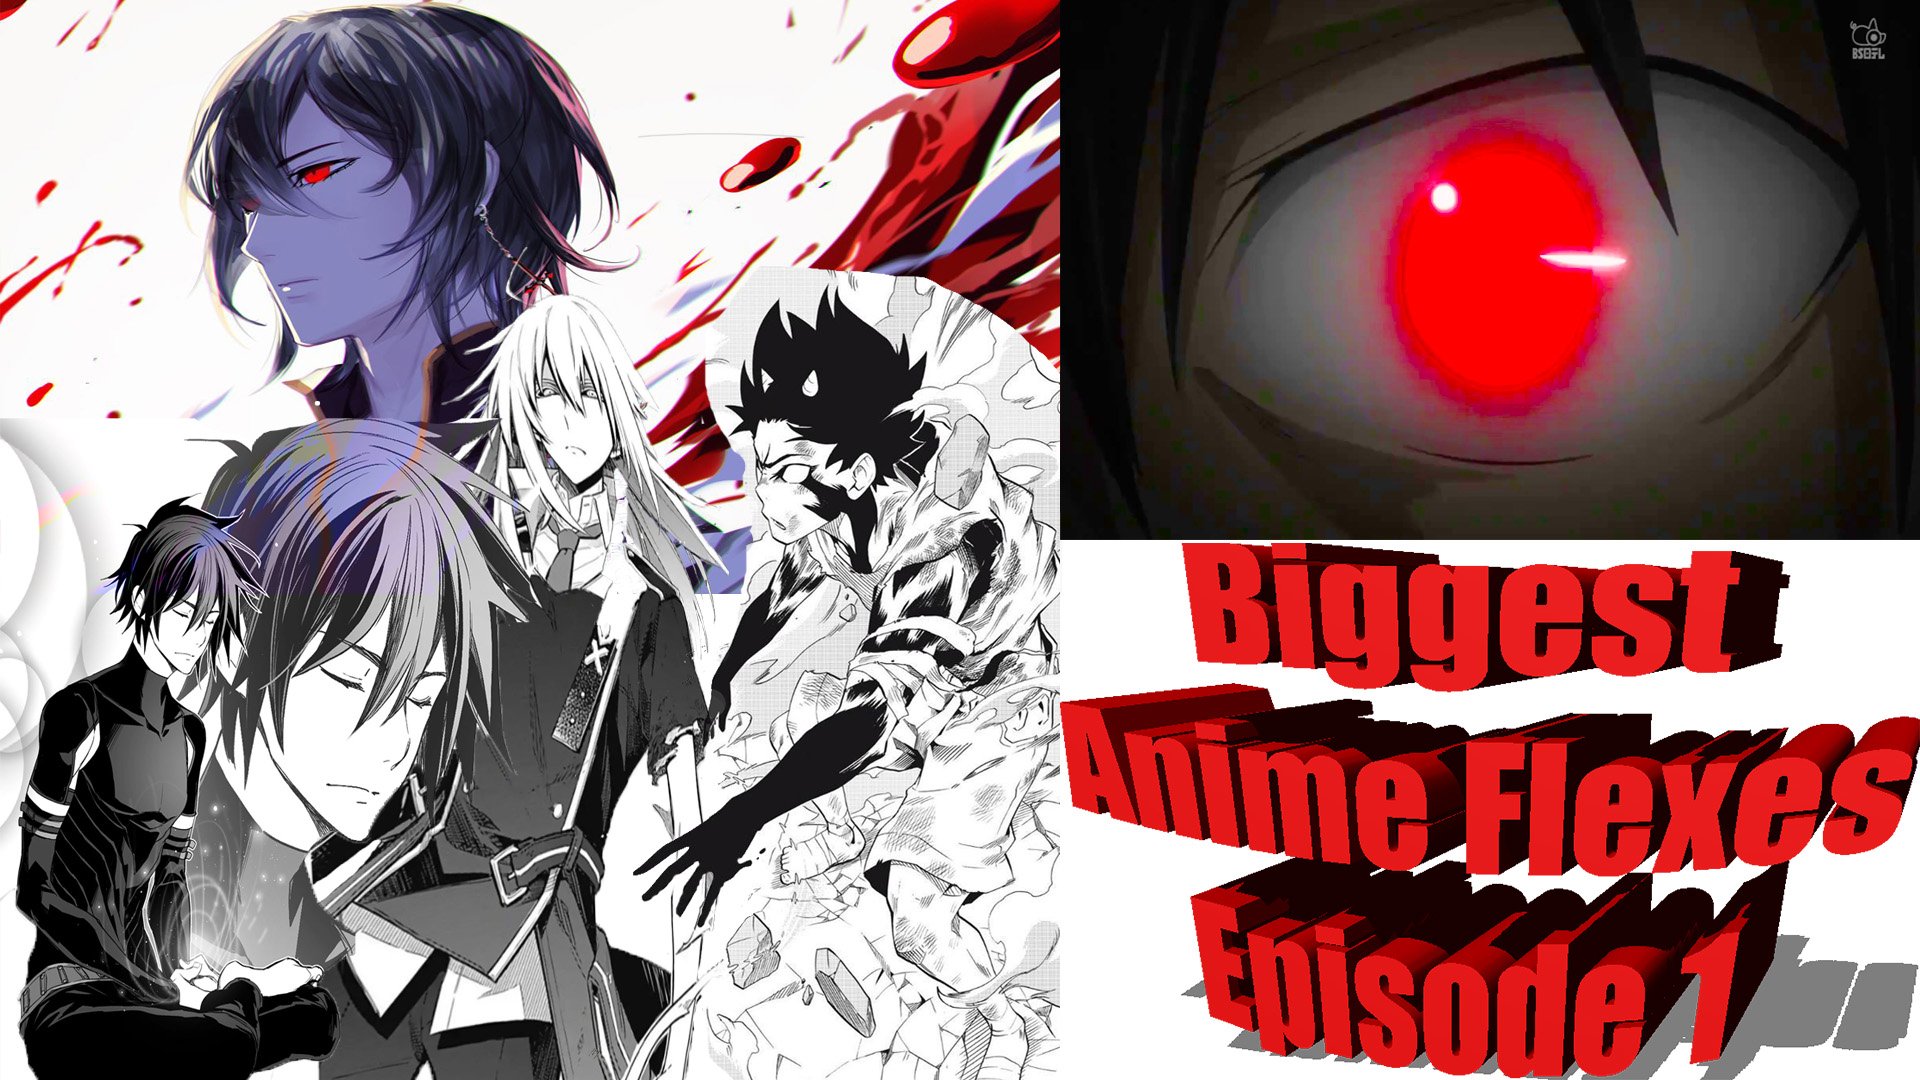 Hataage! Kemono Michi - Episode 1 discussion : r/anime